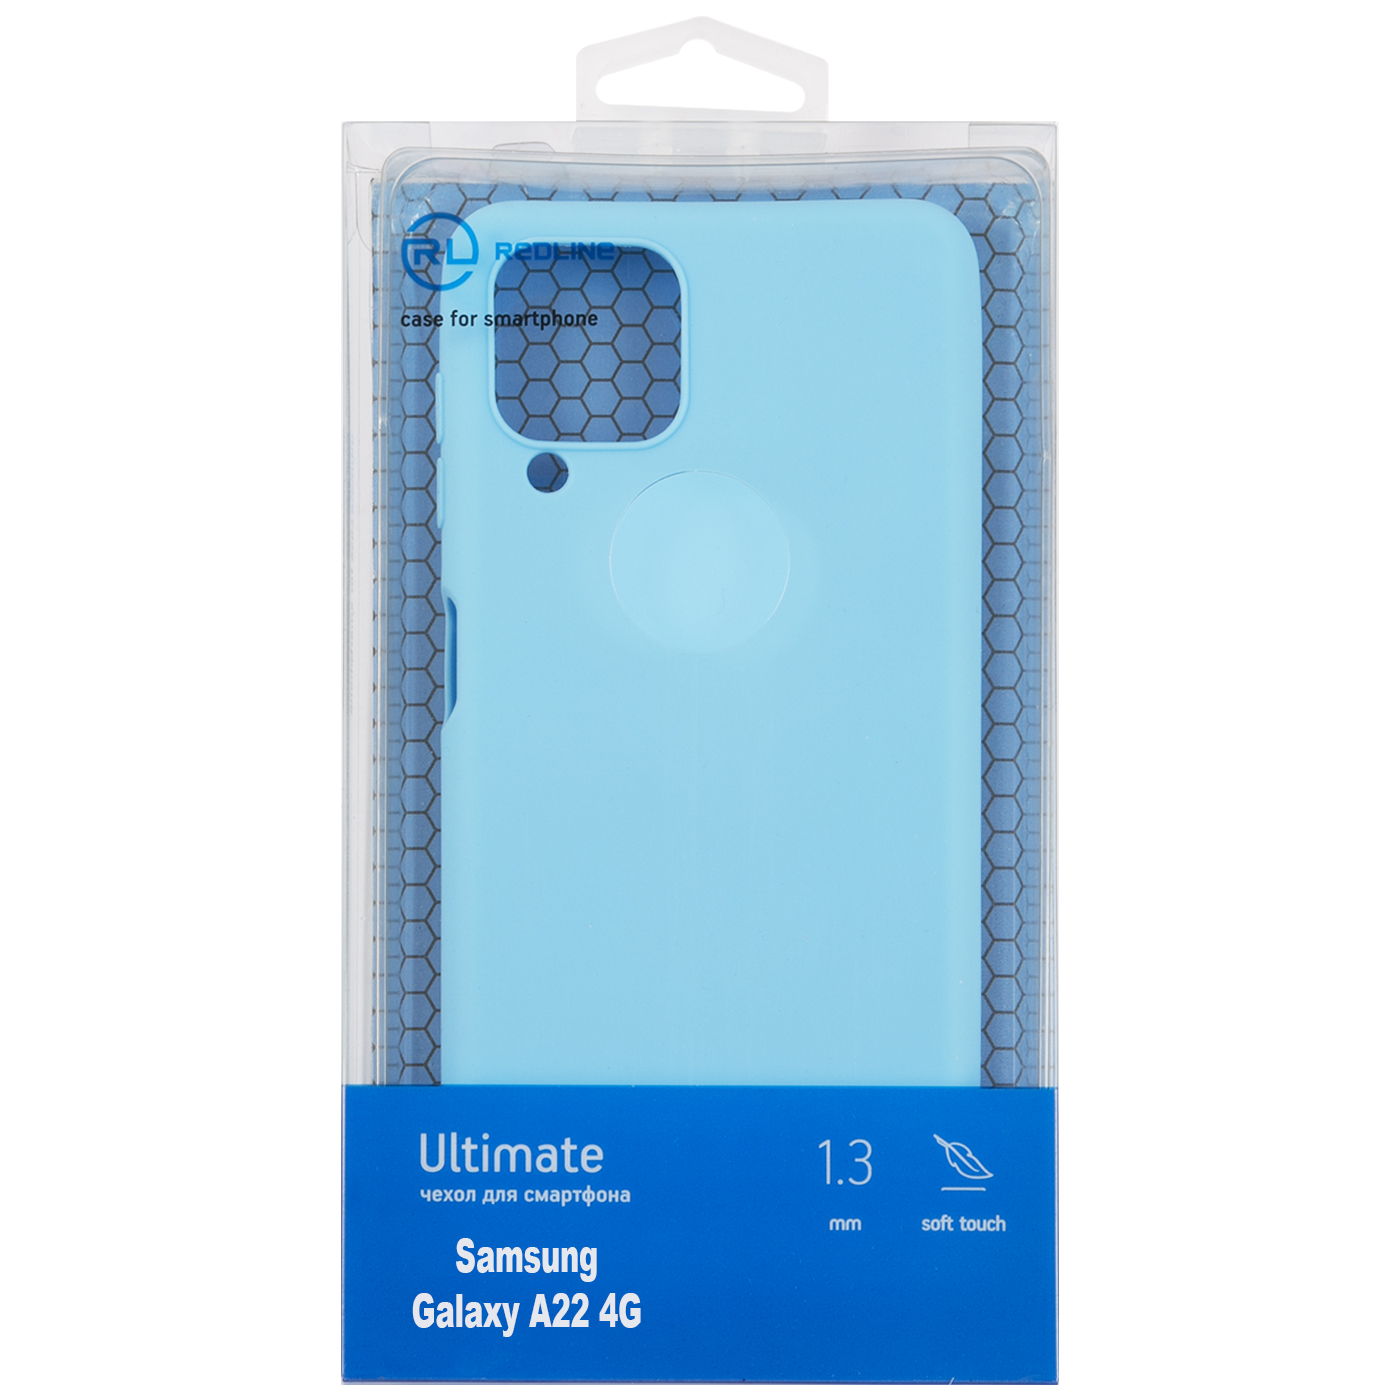 Чехол защитный Red Line Ultimate для Samsung Galaxy A22 4G, голубой УТ000025028 чехол защитный red line ultimate для samsung galaxy a03s 4g зеленый ут000026529